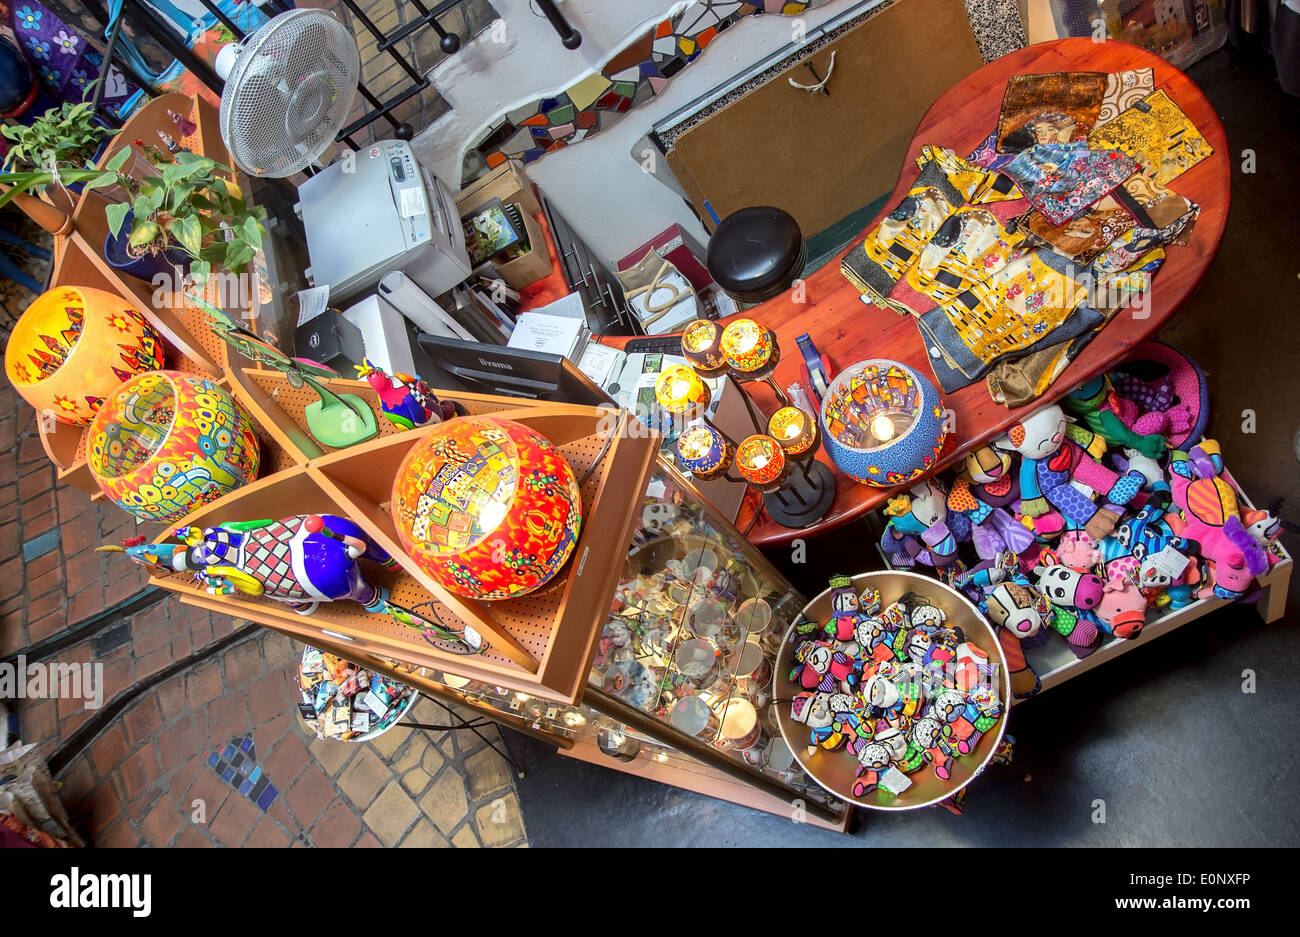 Hundertwasser Village, interior of shop Stock Photo